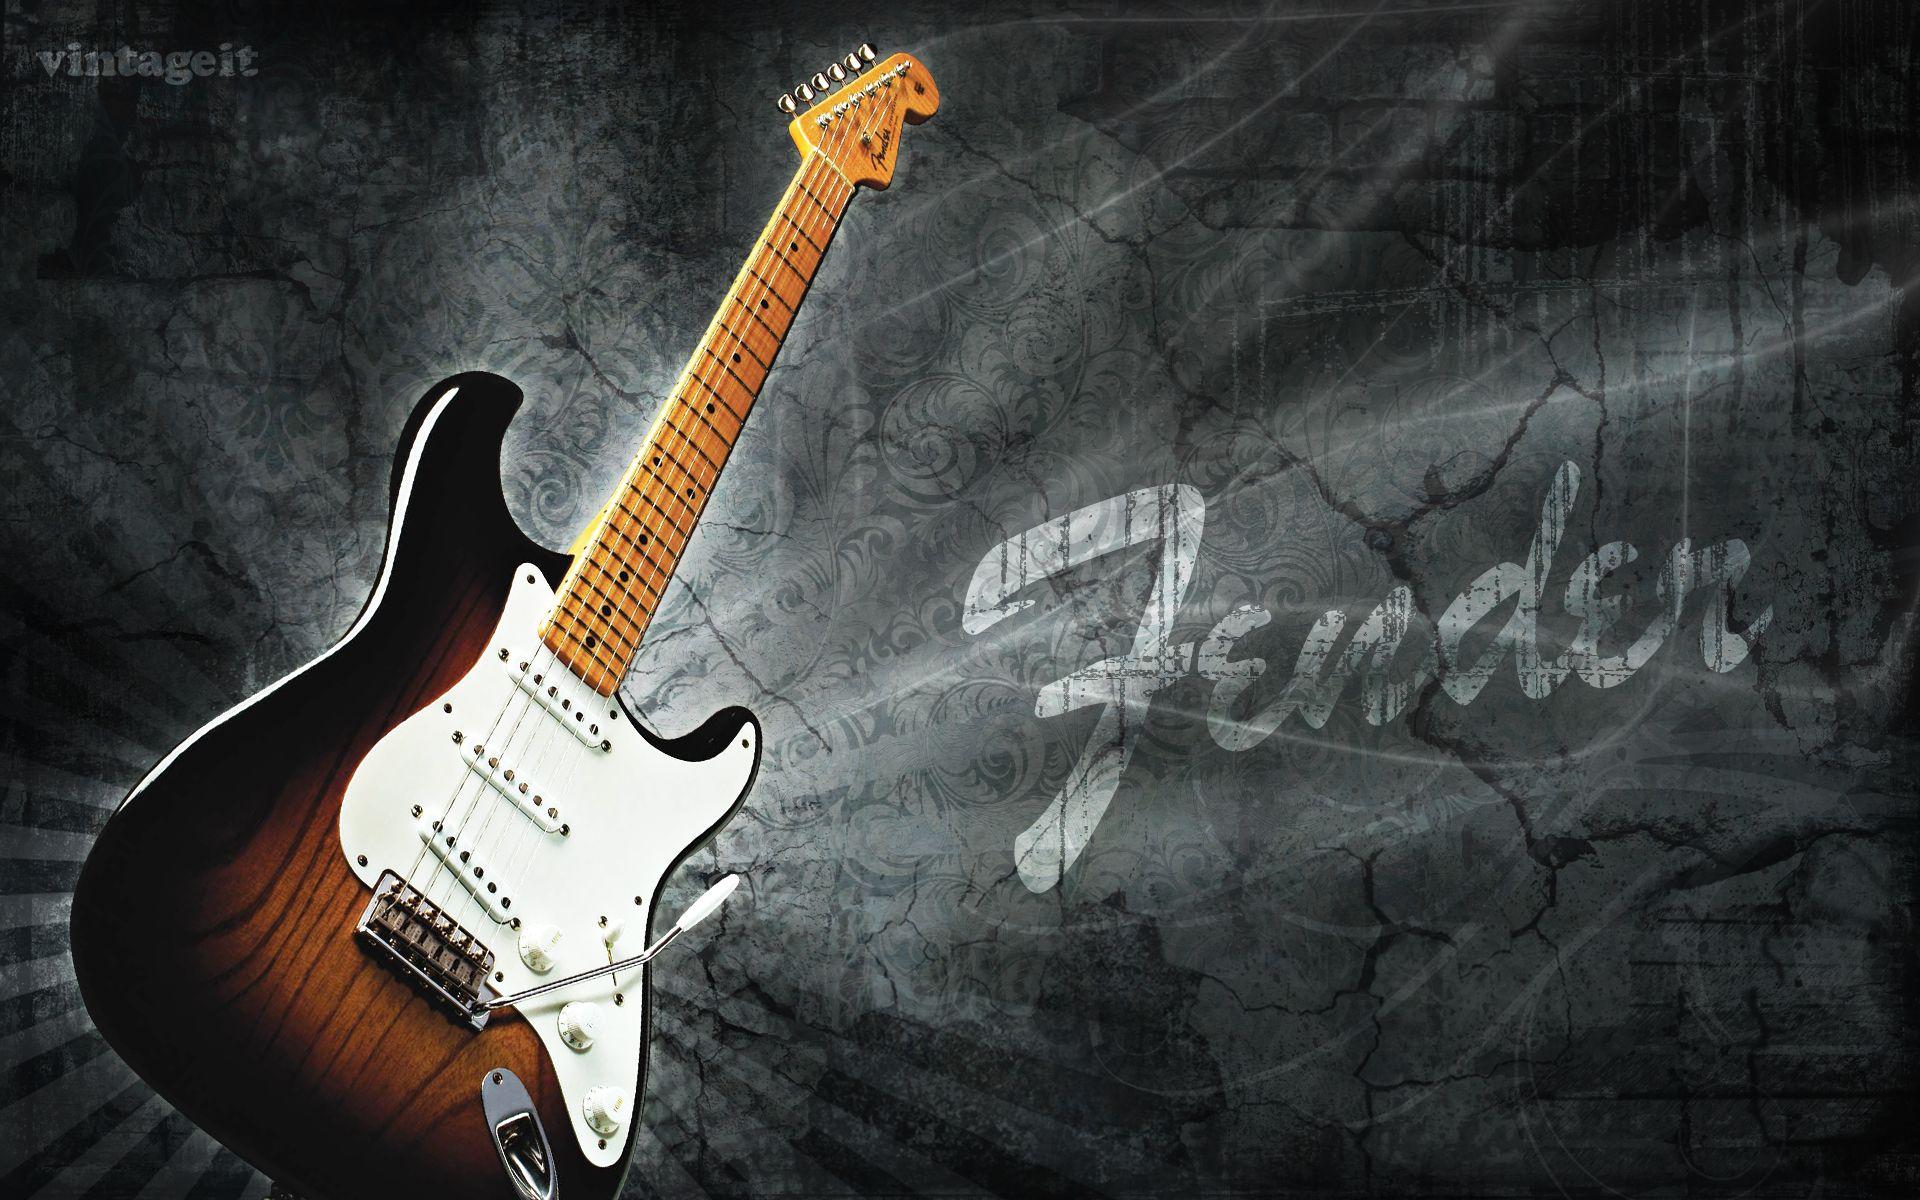 Fender Stratocaster wallpaper Desktop HD iPad iPhone wallpaper